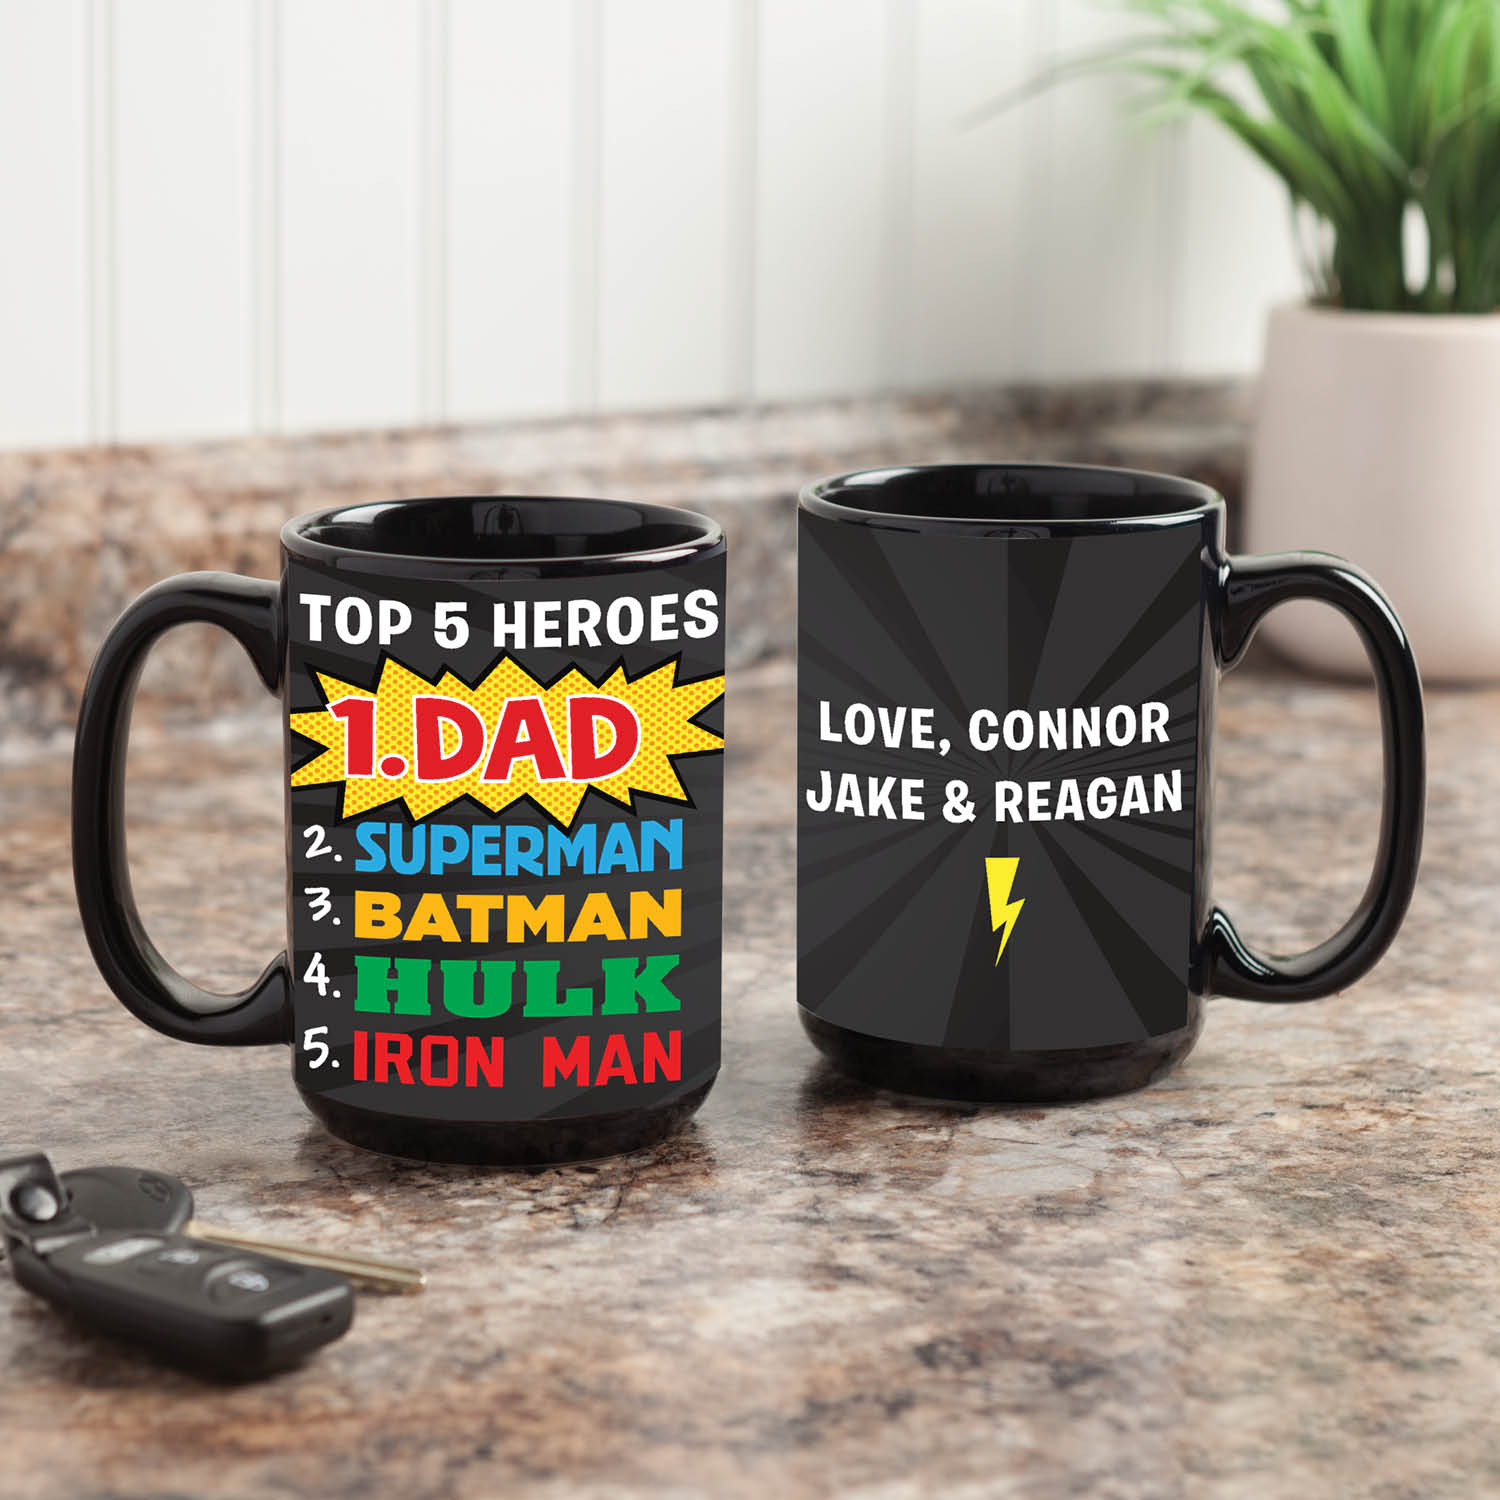 Top 5 Heroes Personalized Black Coffee Mug - 15 oz.